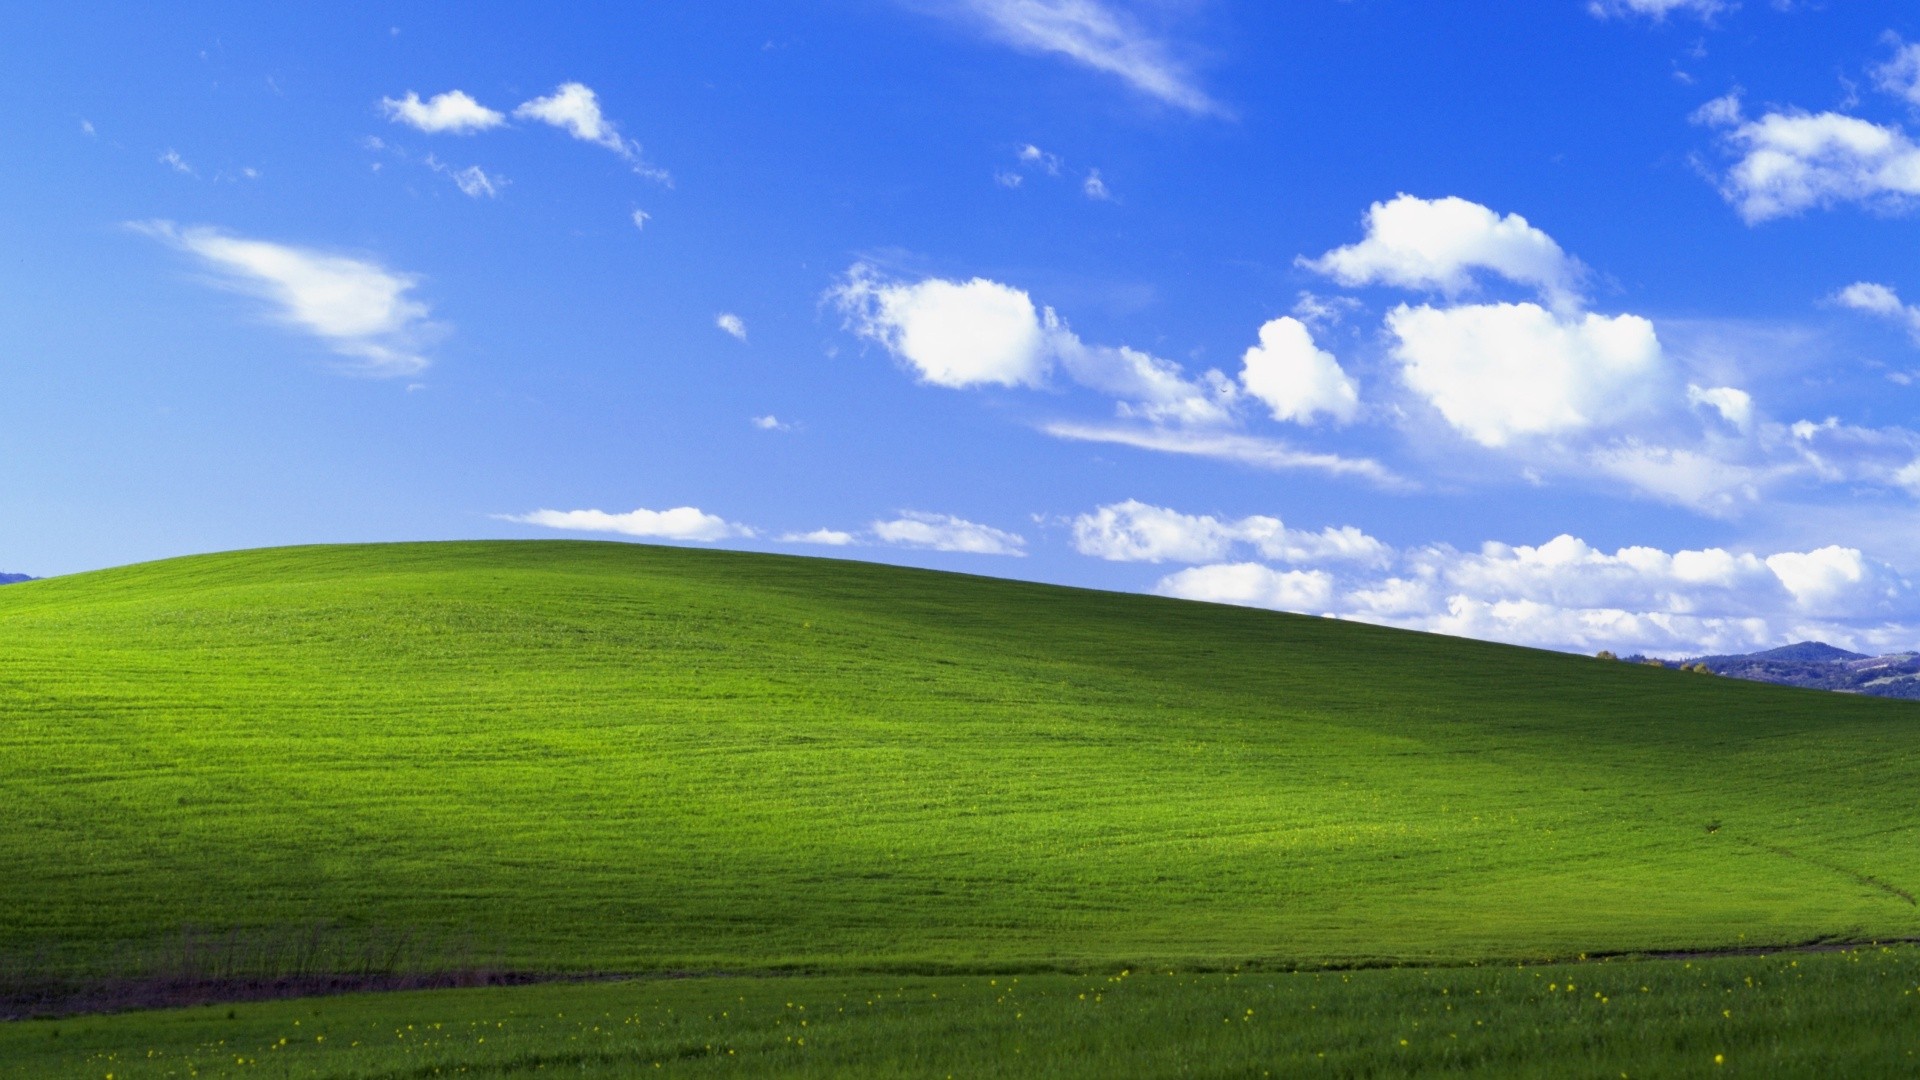 General 1920x1080 Windows XP garden landscape nostalgia field green bliss simple background hills sky clouds grass Charles O'Rear